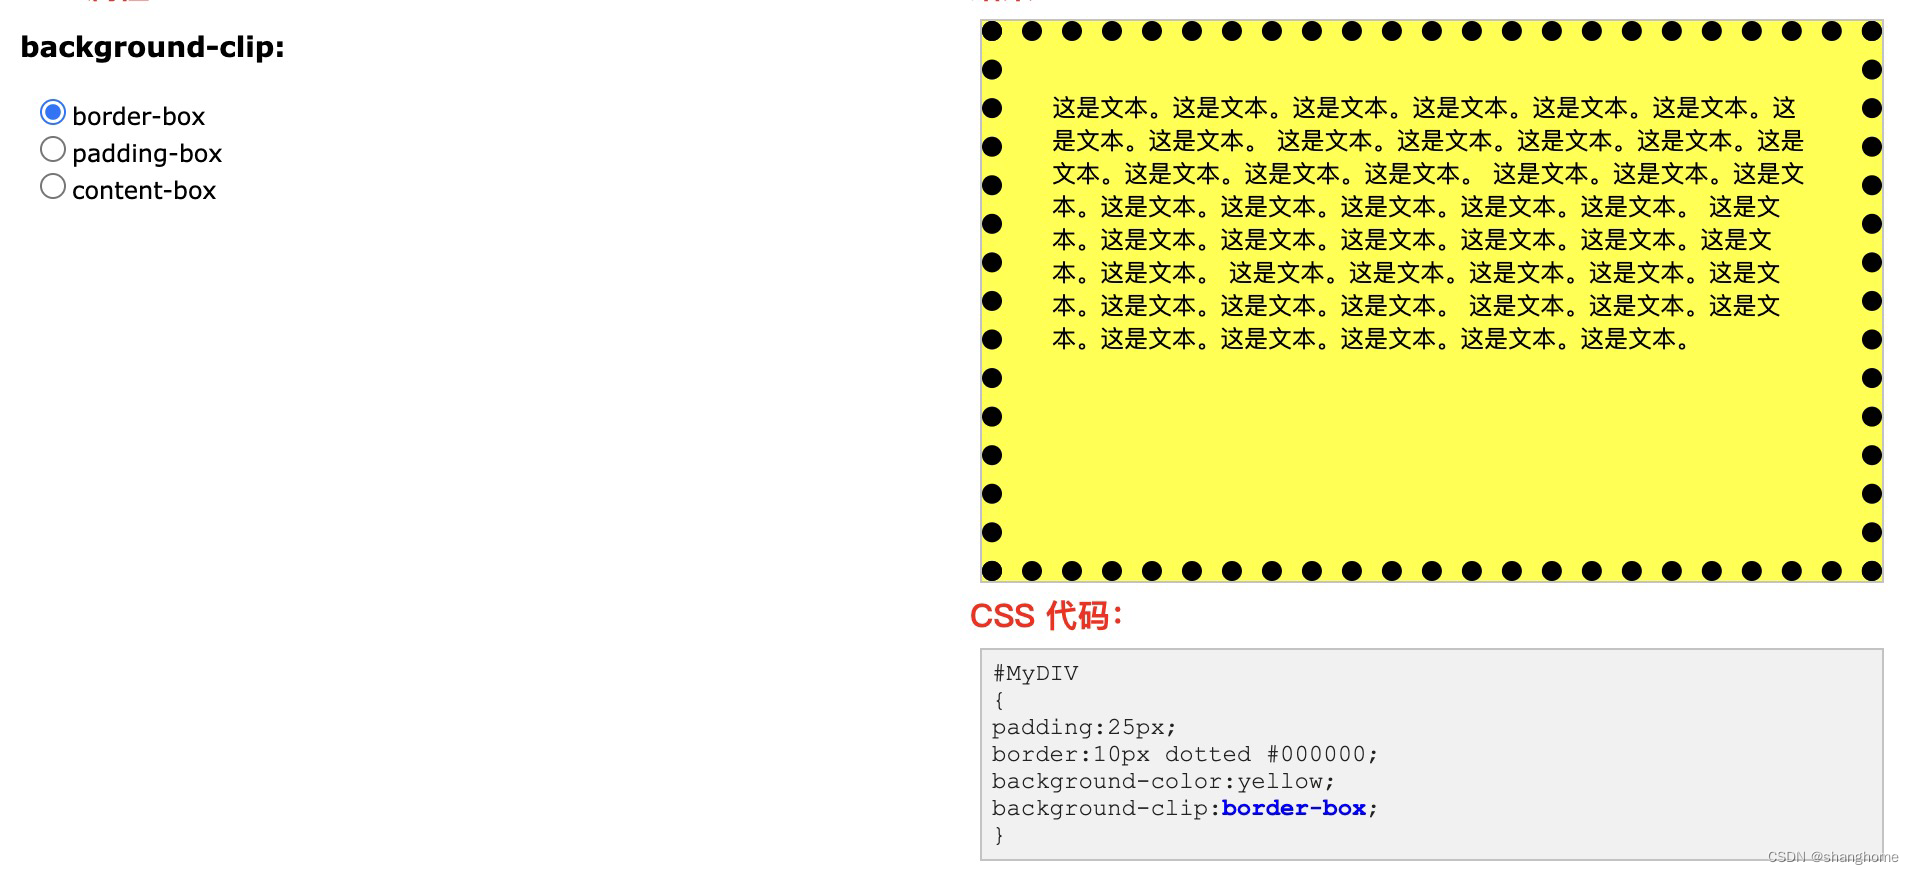 background-clip，background-origin 两个不常用的属性_shanghome的博客-CSDN博客